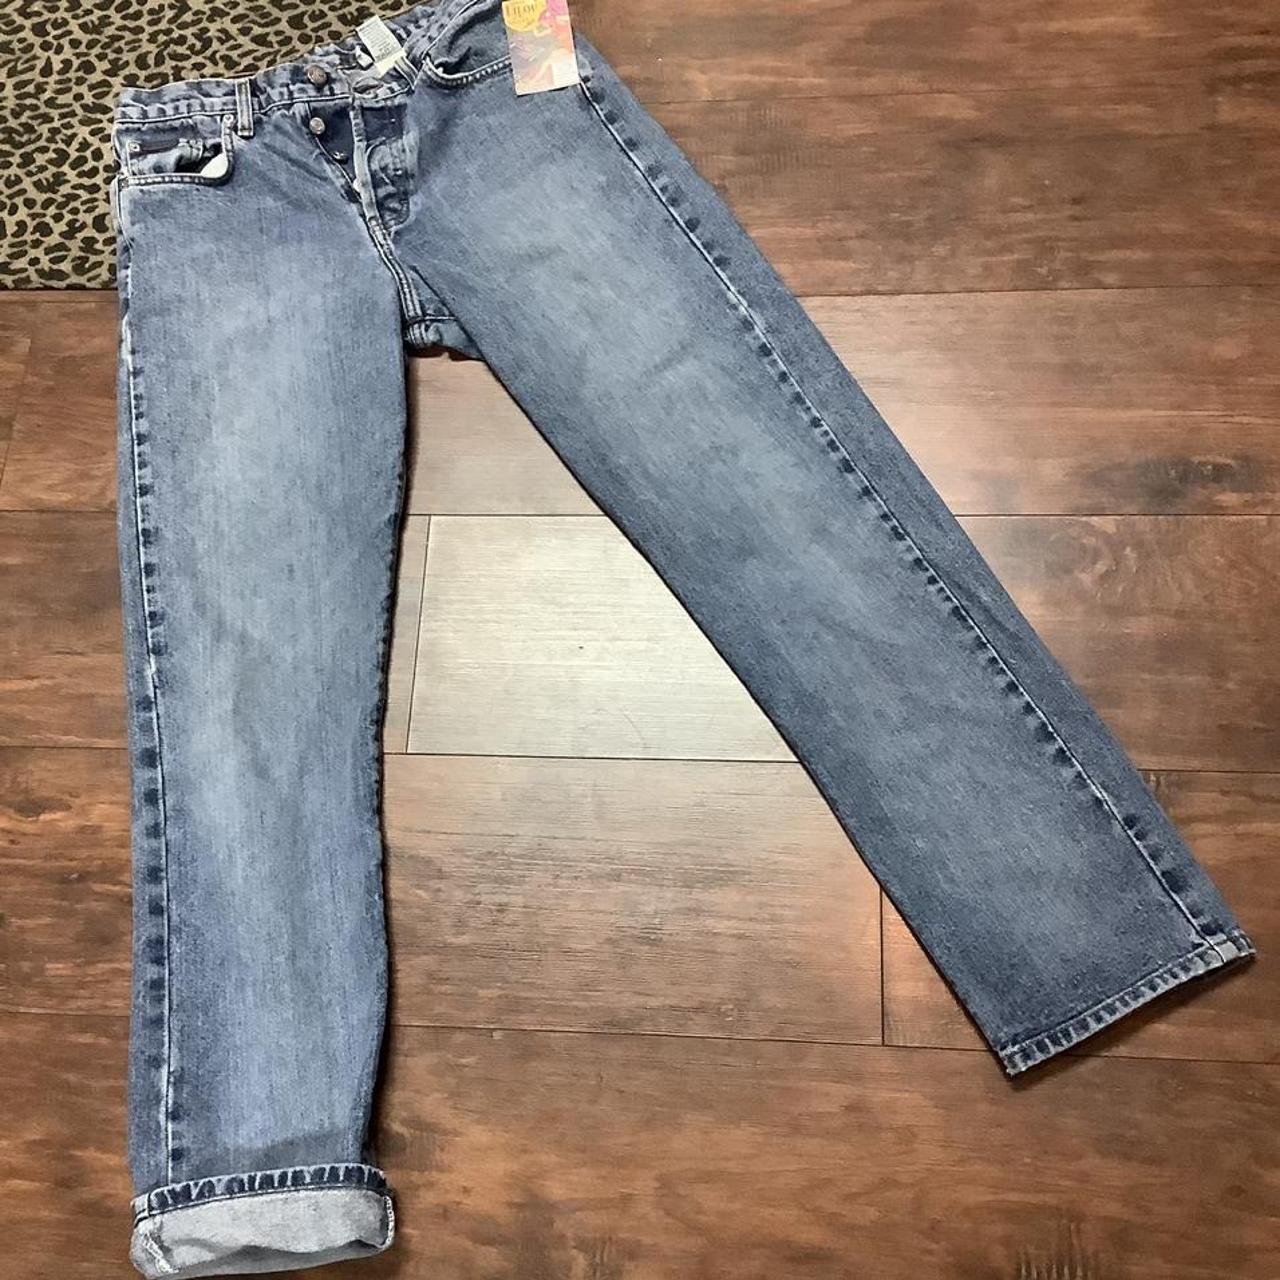 Product Image 2 - Vintage Ck jeans.
Labeled Size: 9
Measurements: